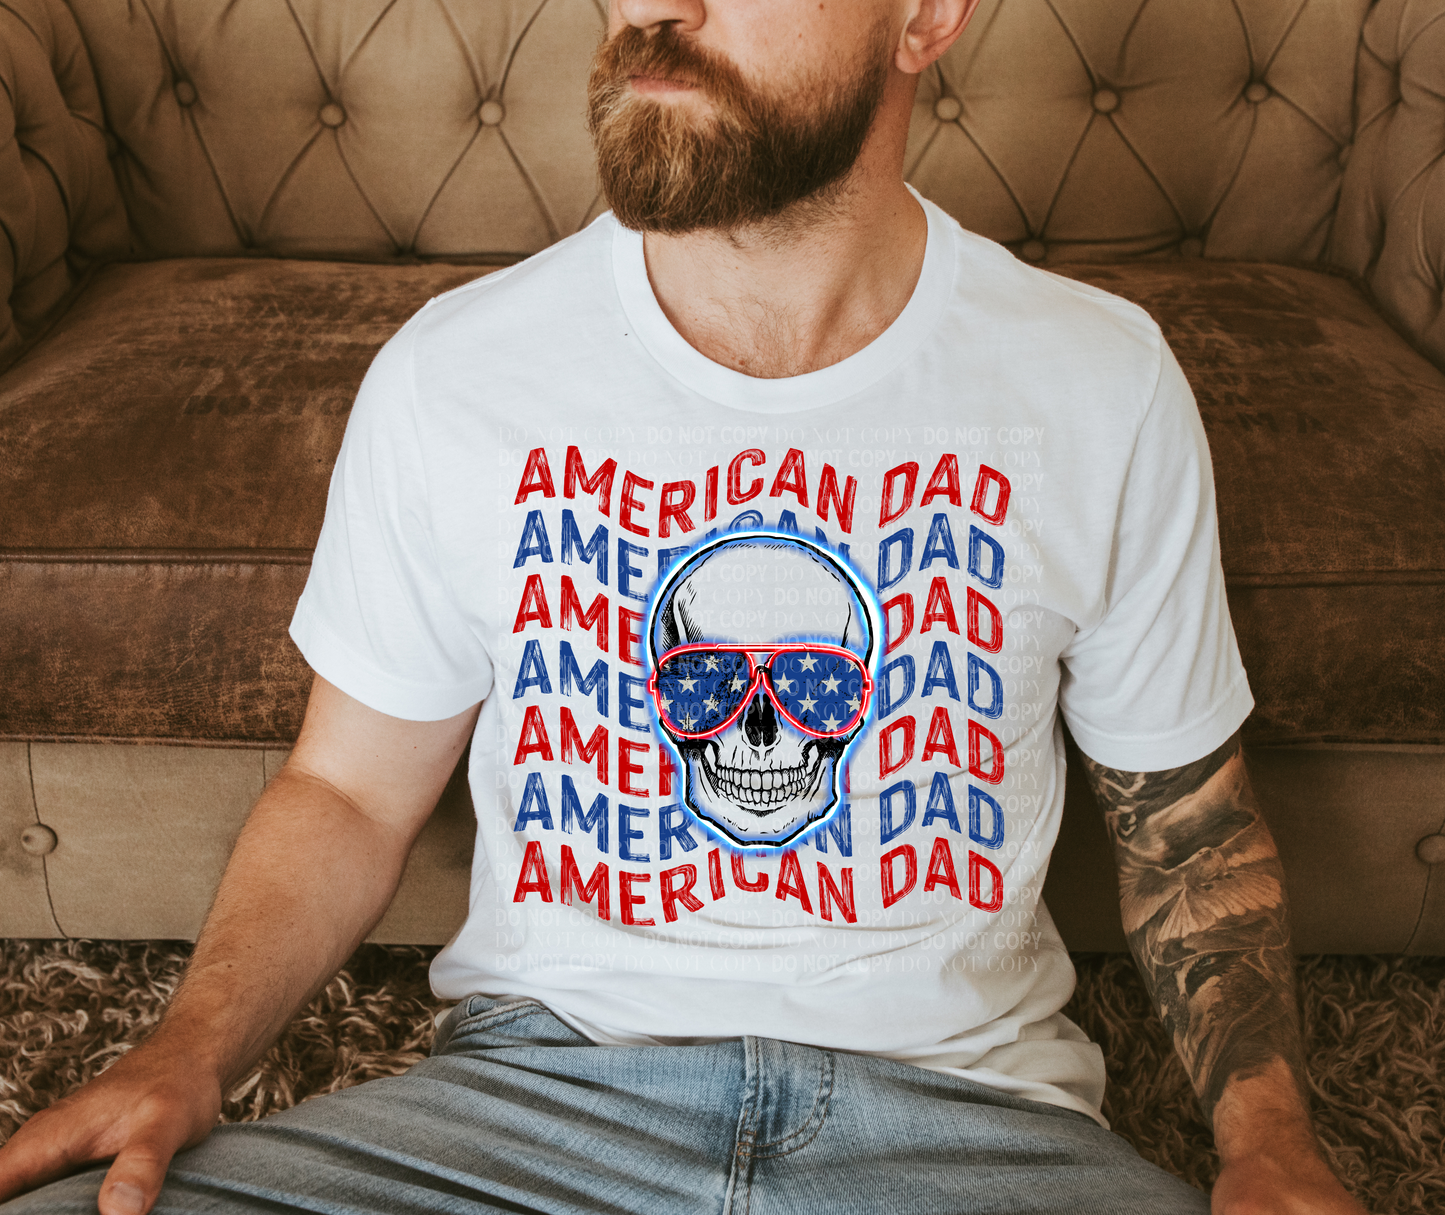 American Dad Digital PNG